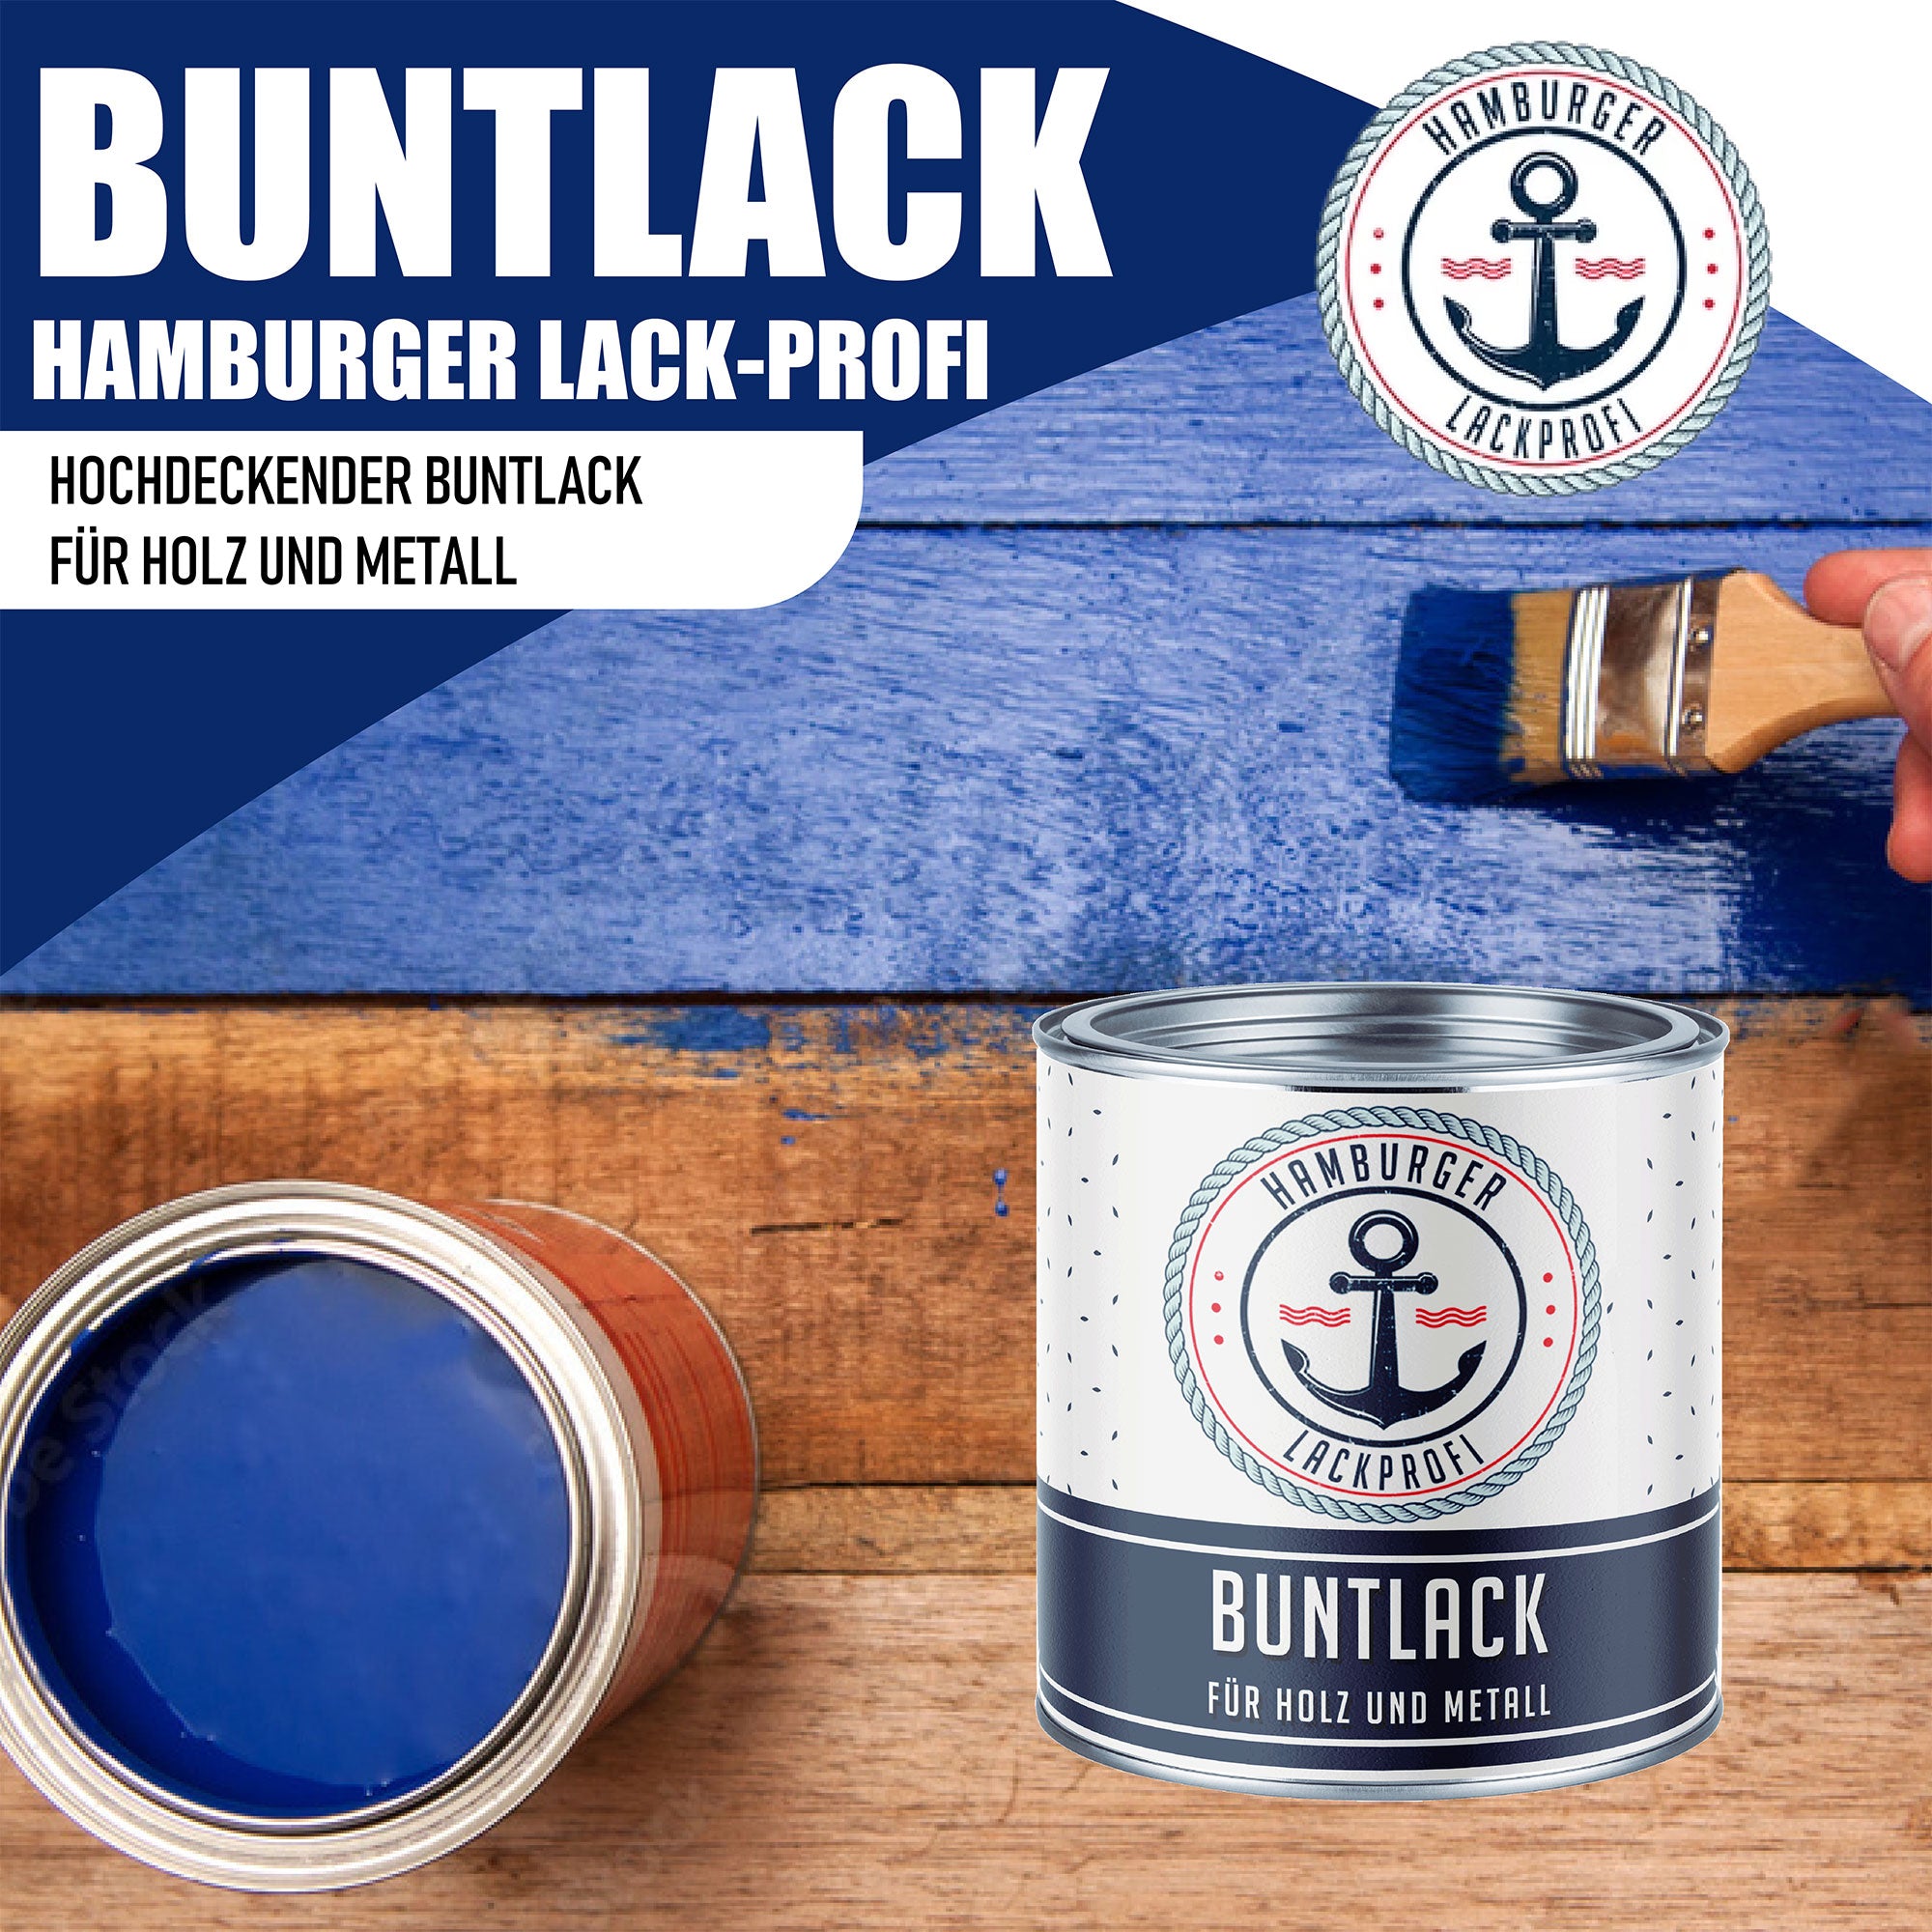 Hamburger Lack-Profi Buntlack Seidengrau RAL 7044 - Robuster Kunstharzlack